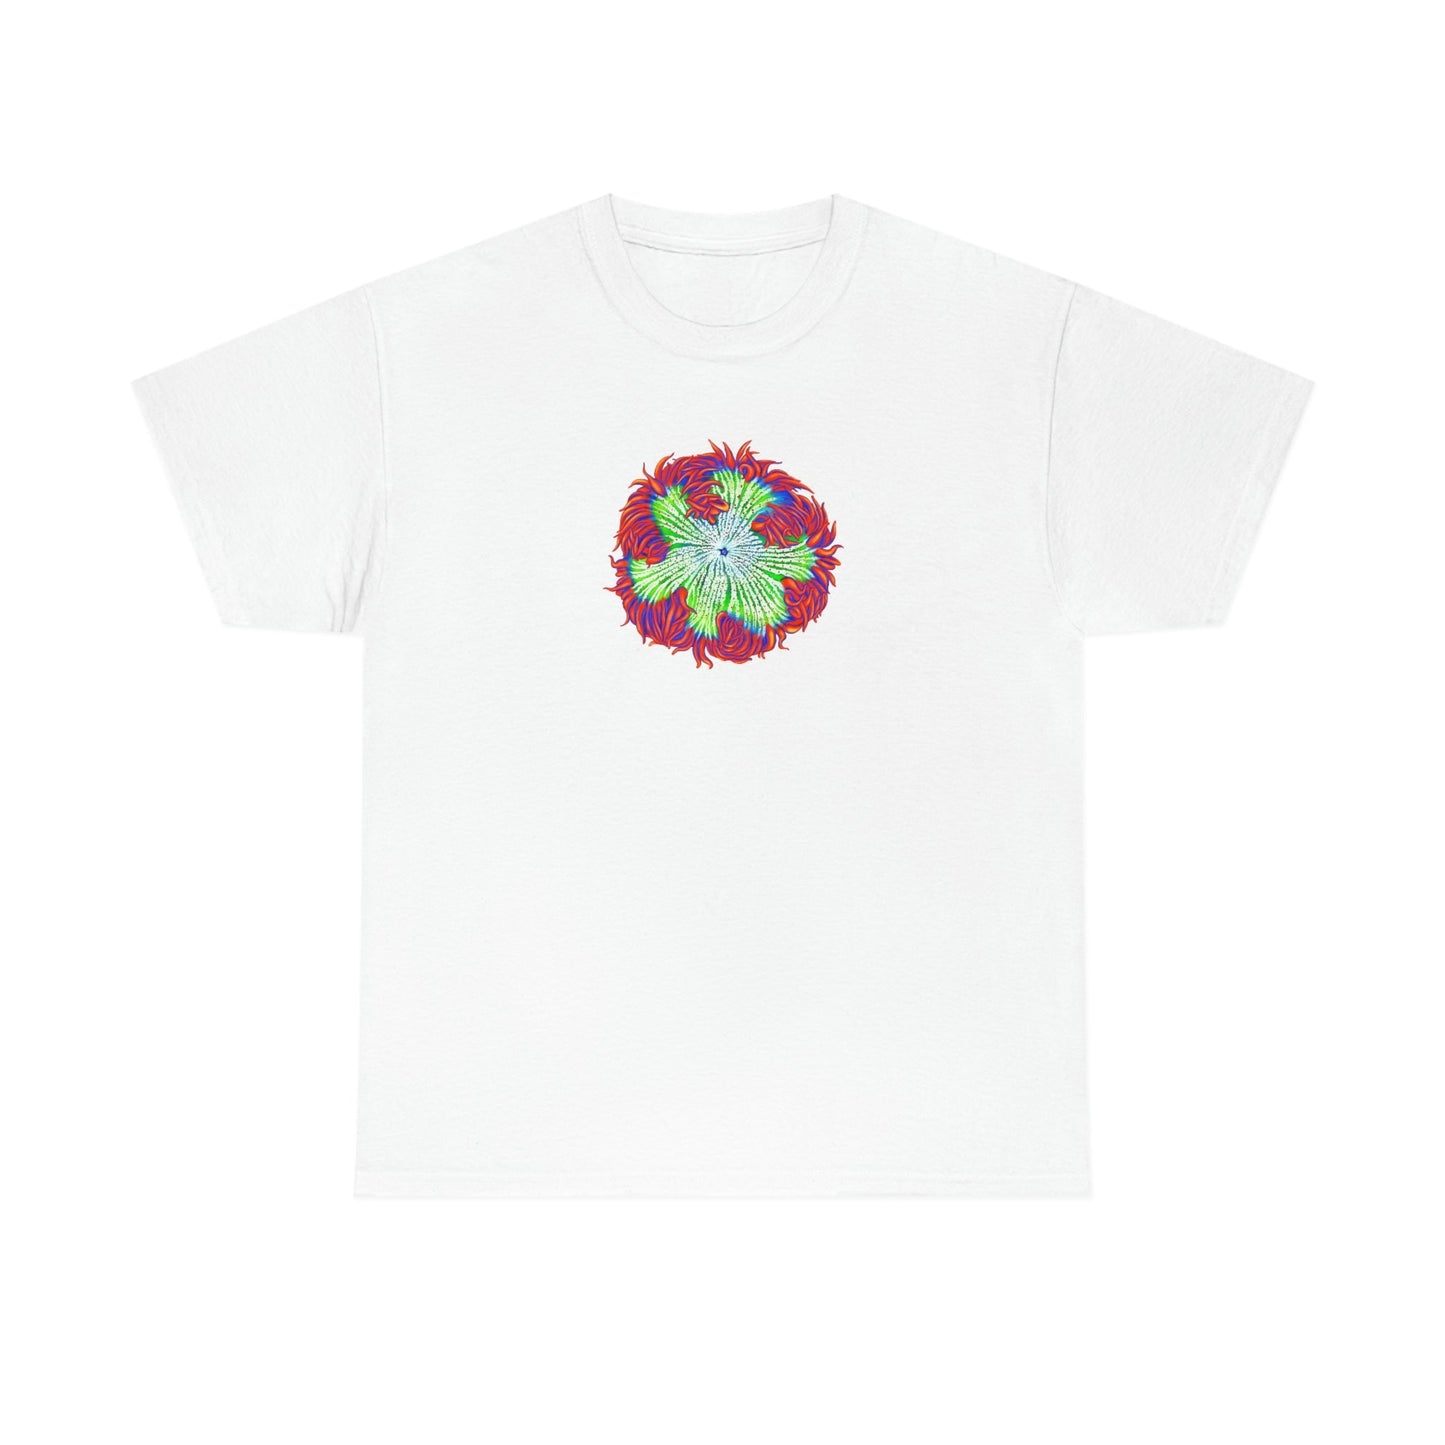 Simple Rockflower Anemone Shirt - Reef of Clowns